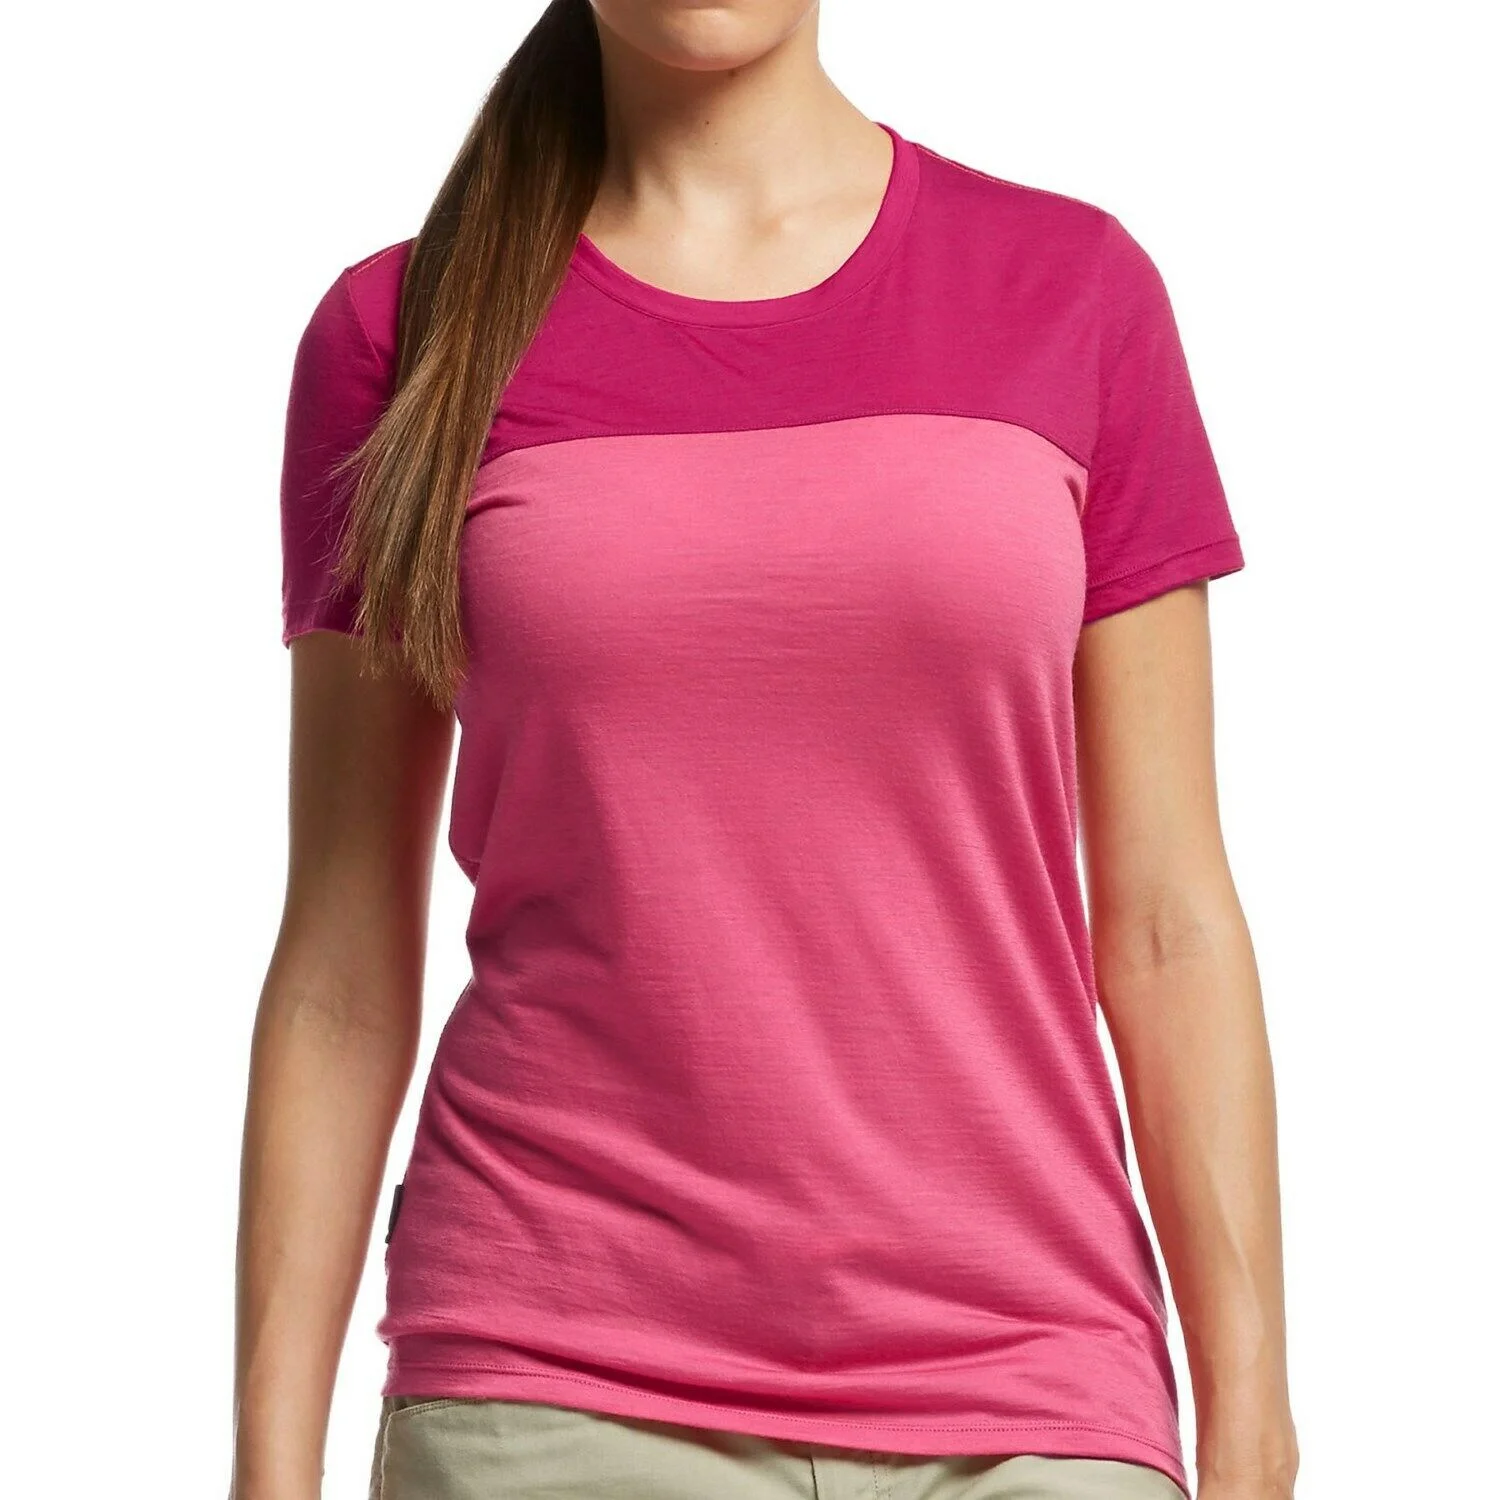 Women Activewear T Shirt from Bangladesh Workout Clothing Manufacturer